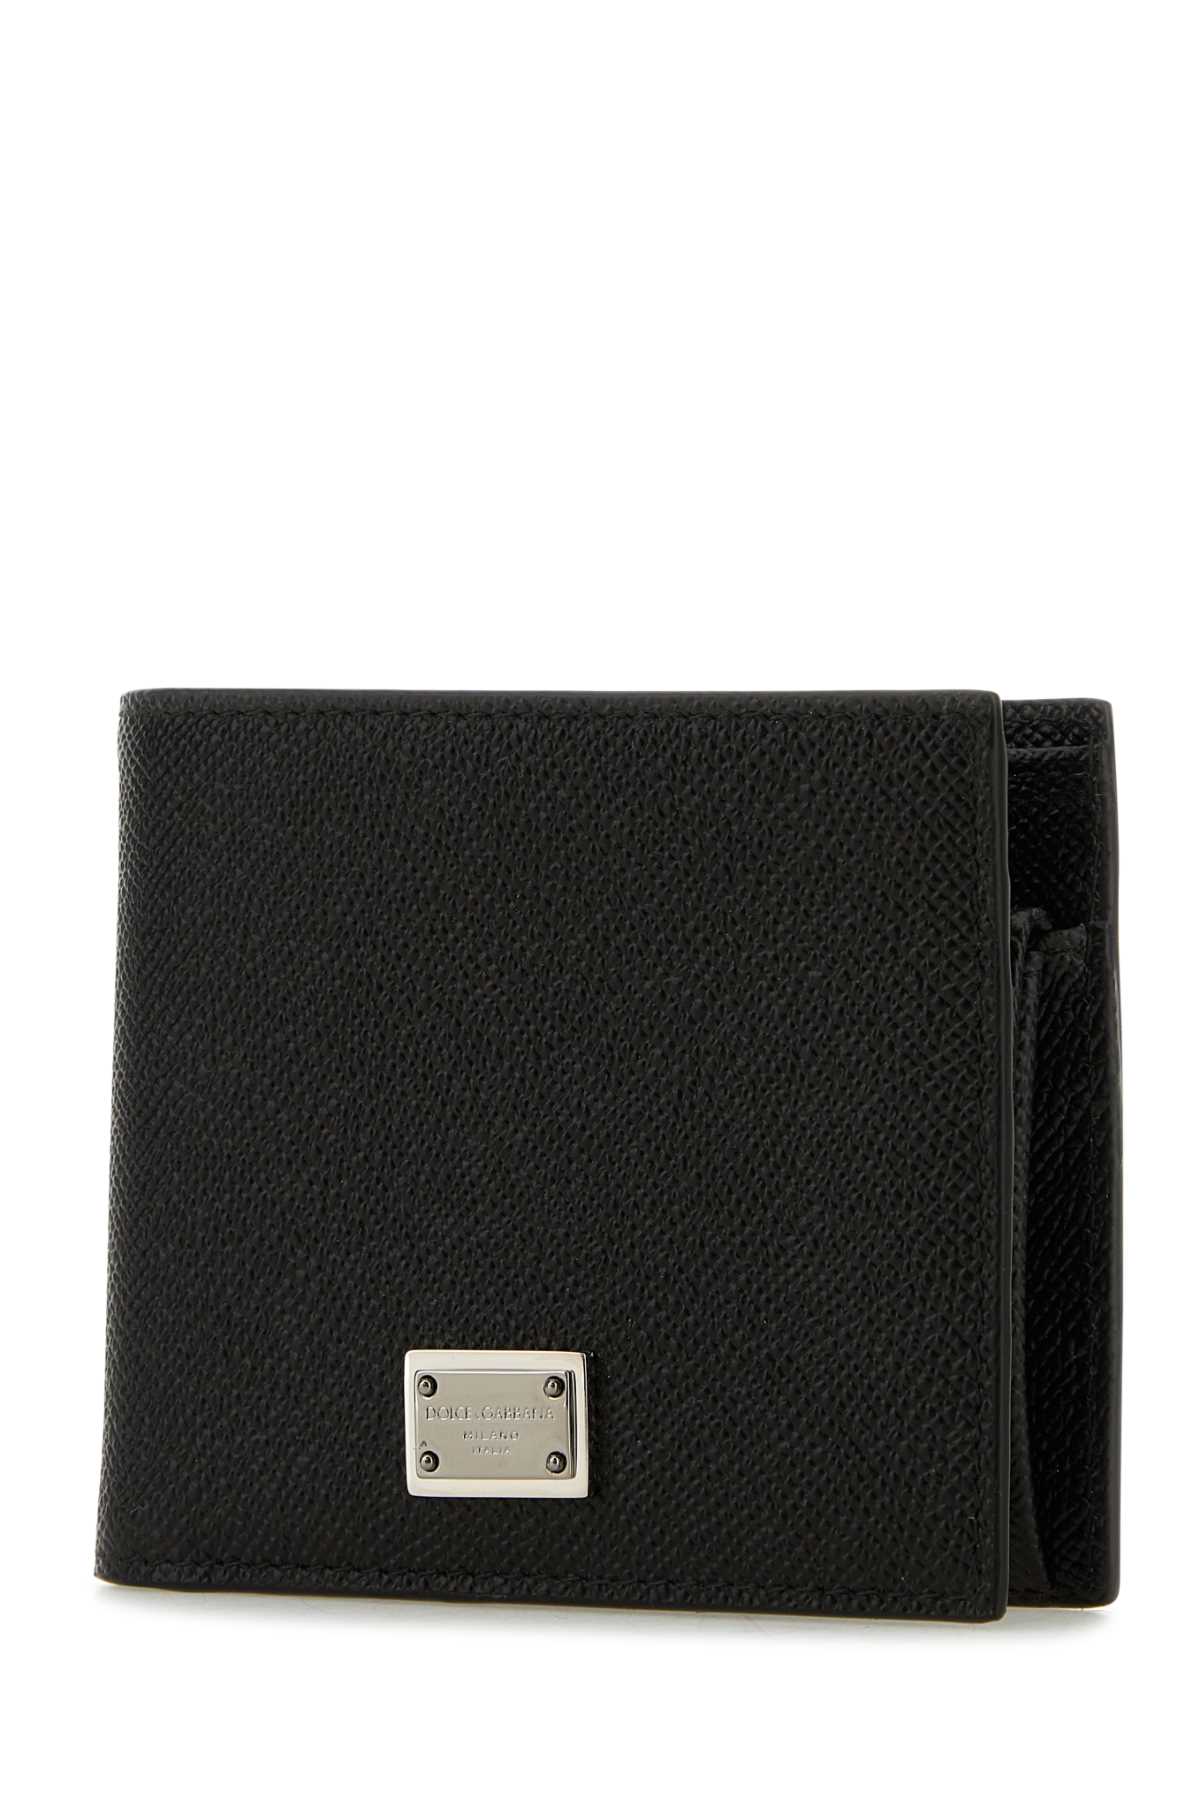 Dolce & Gabbana Black Leather Wallet In Nero